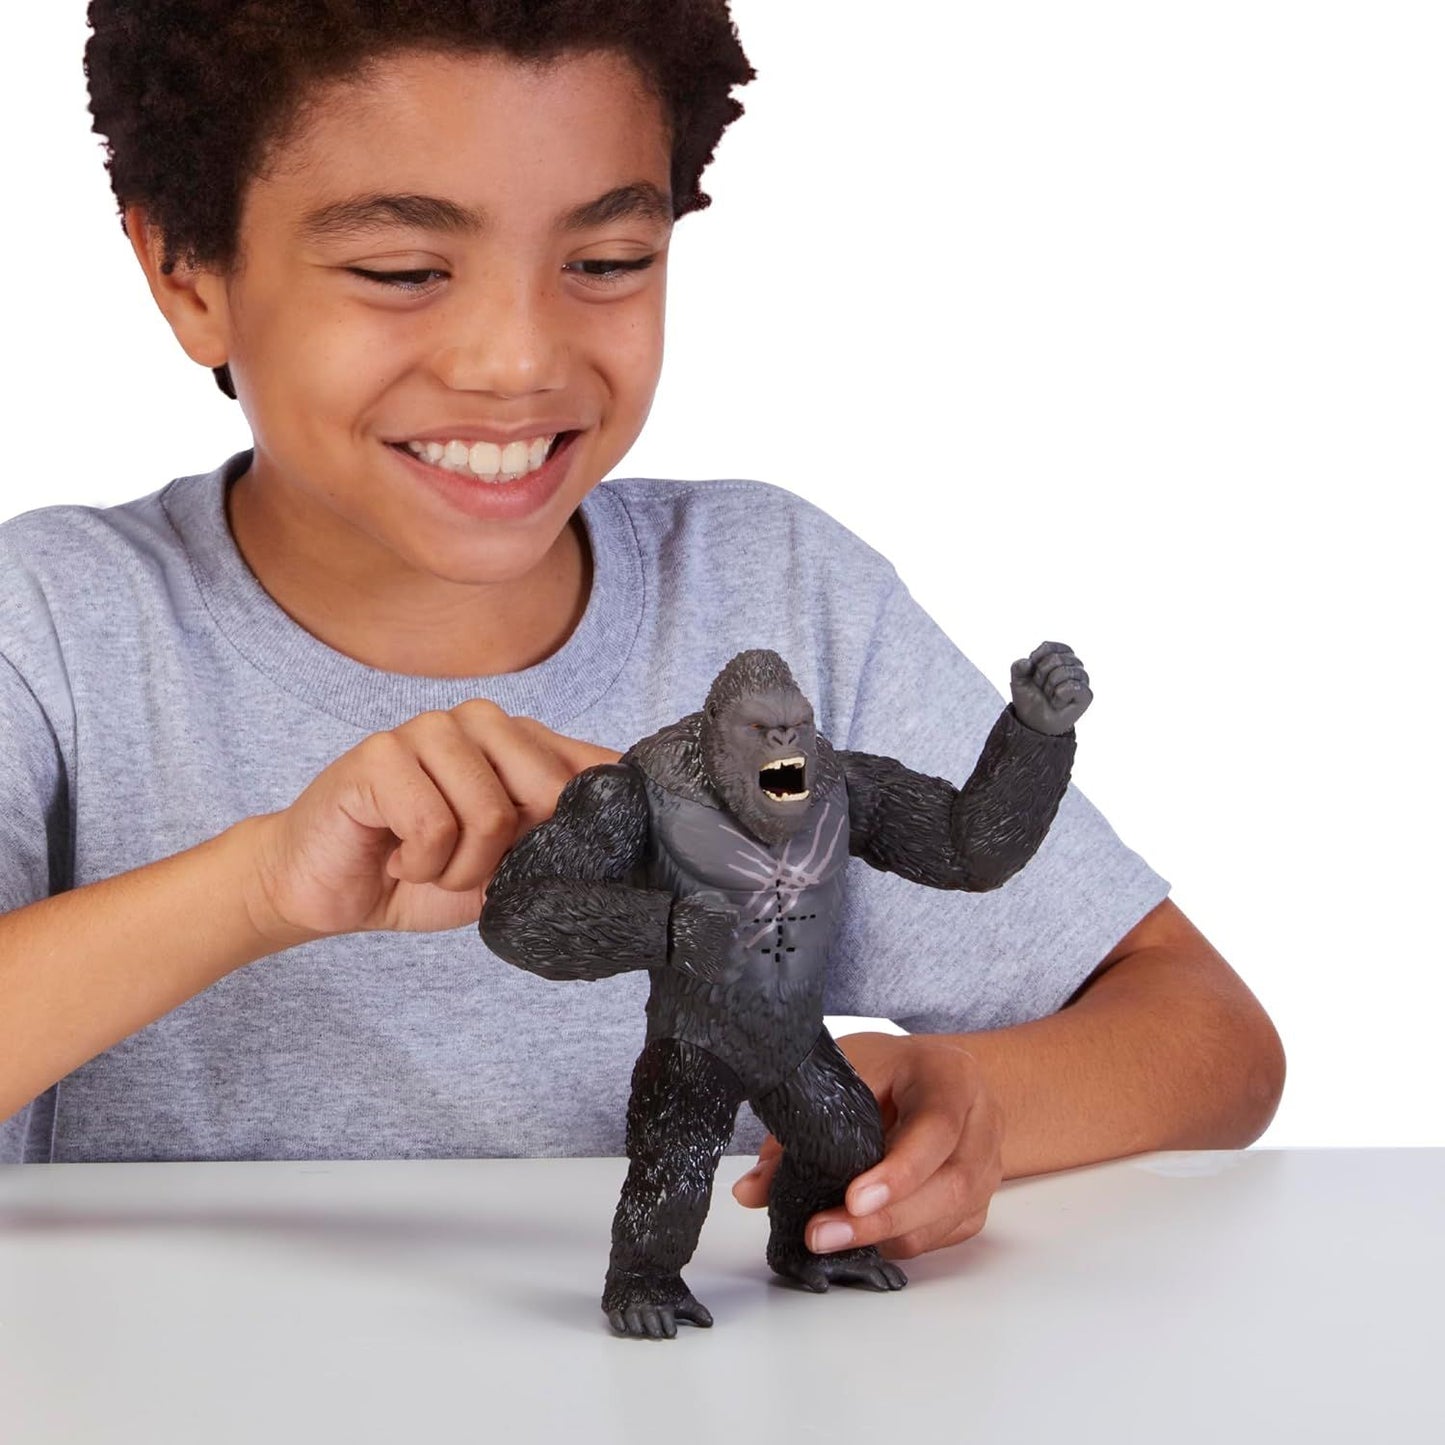 Godzilla x Kong : The New Empire 7" Battle Roar Kong Figure by Playmates Toys